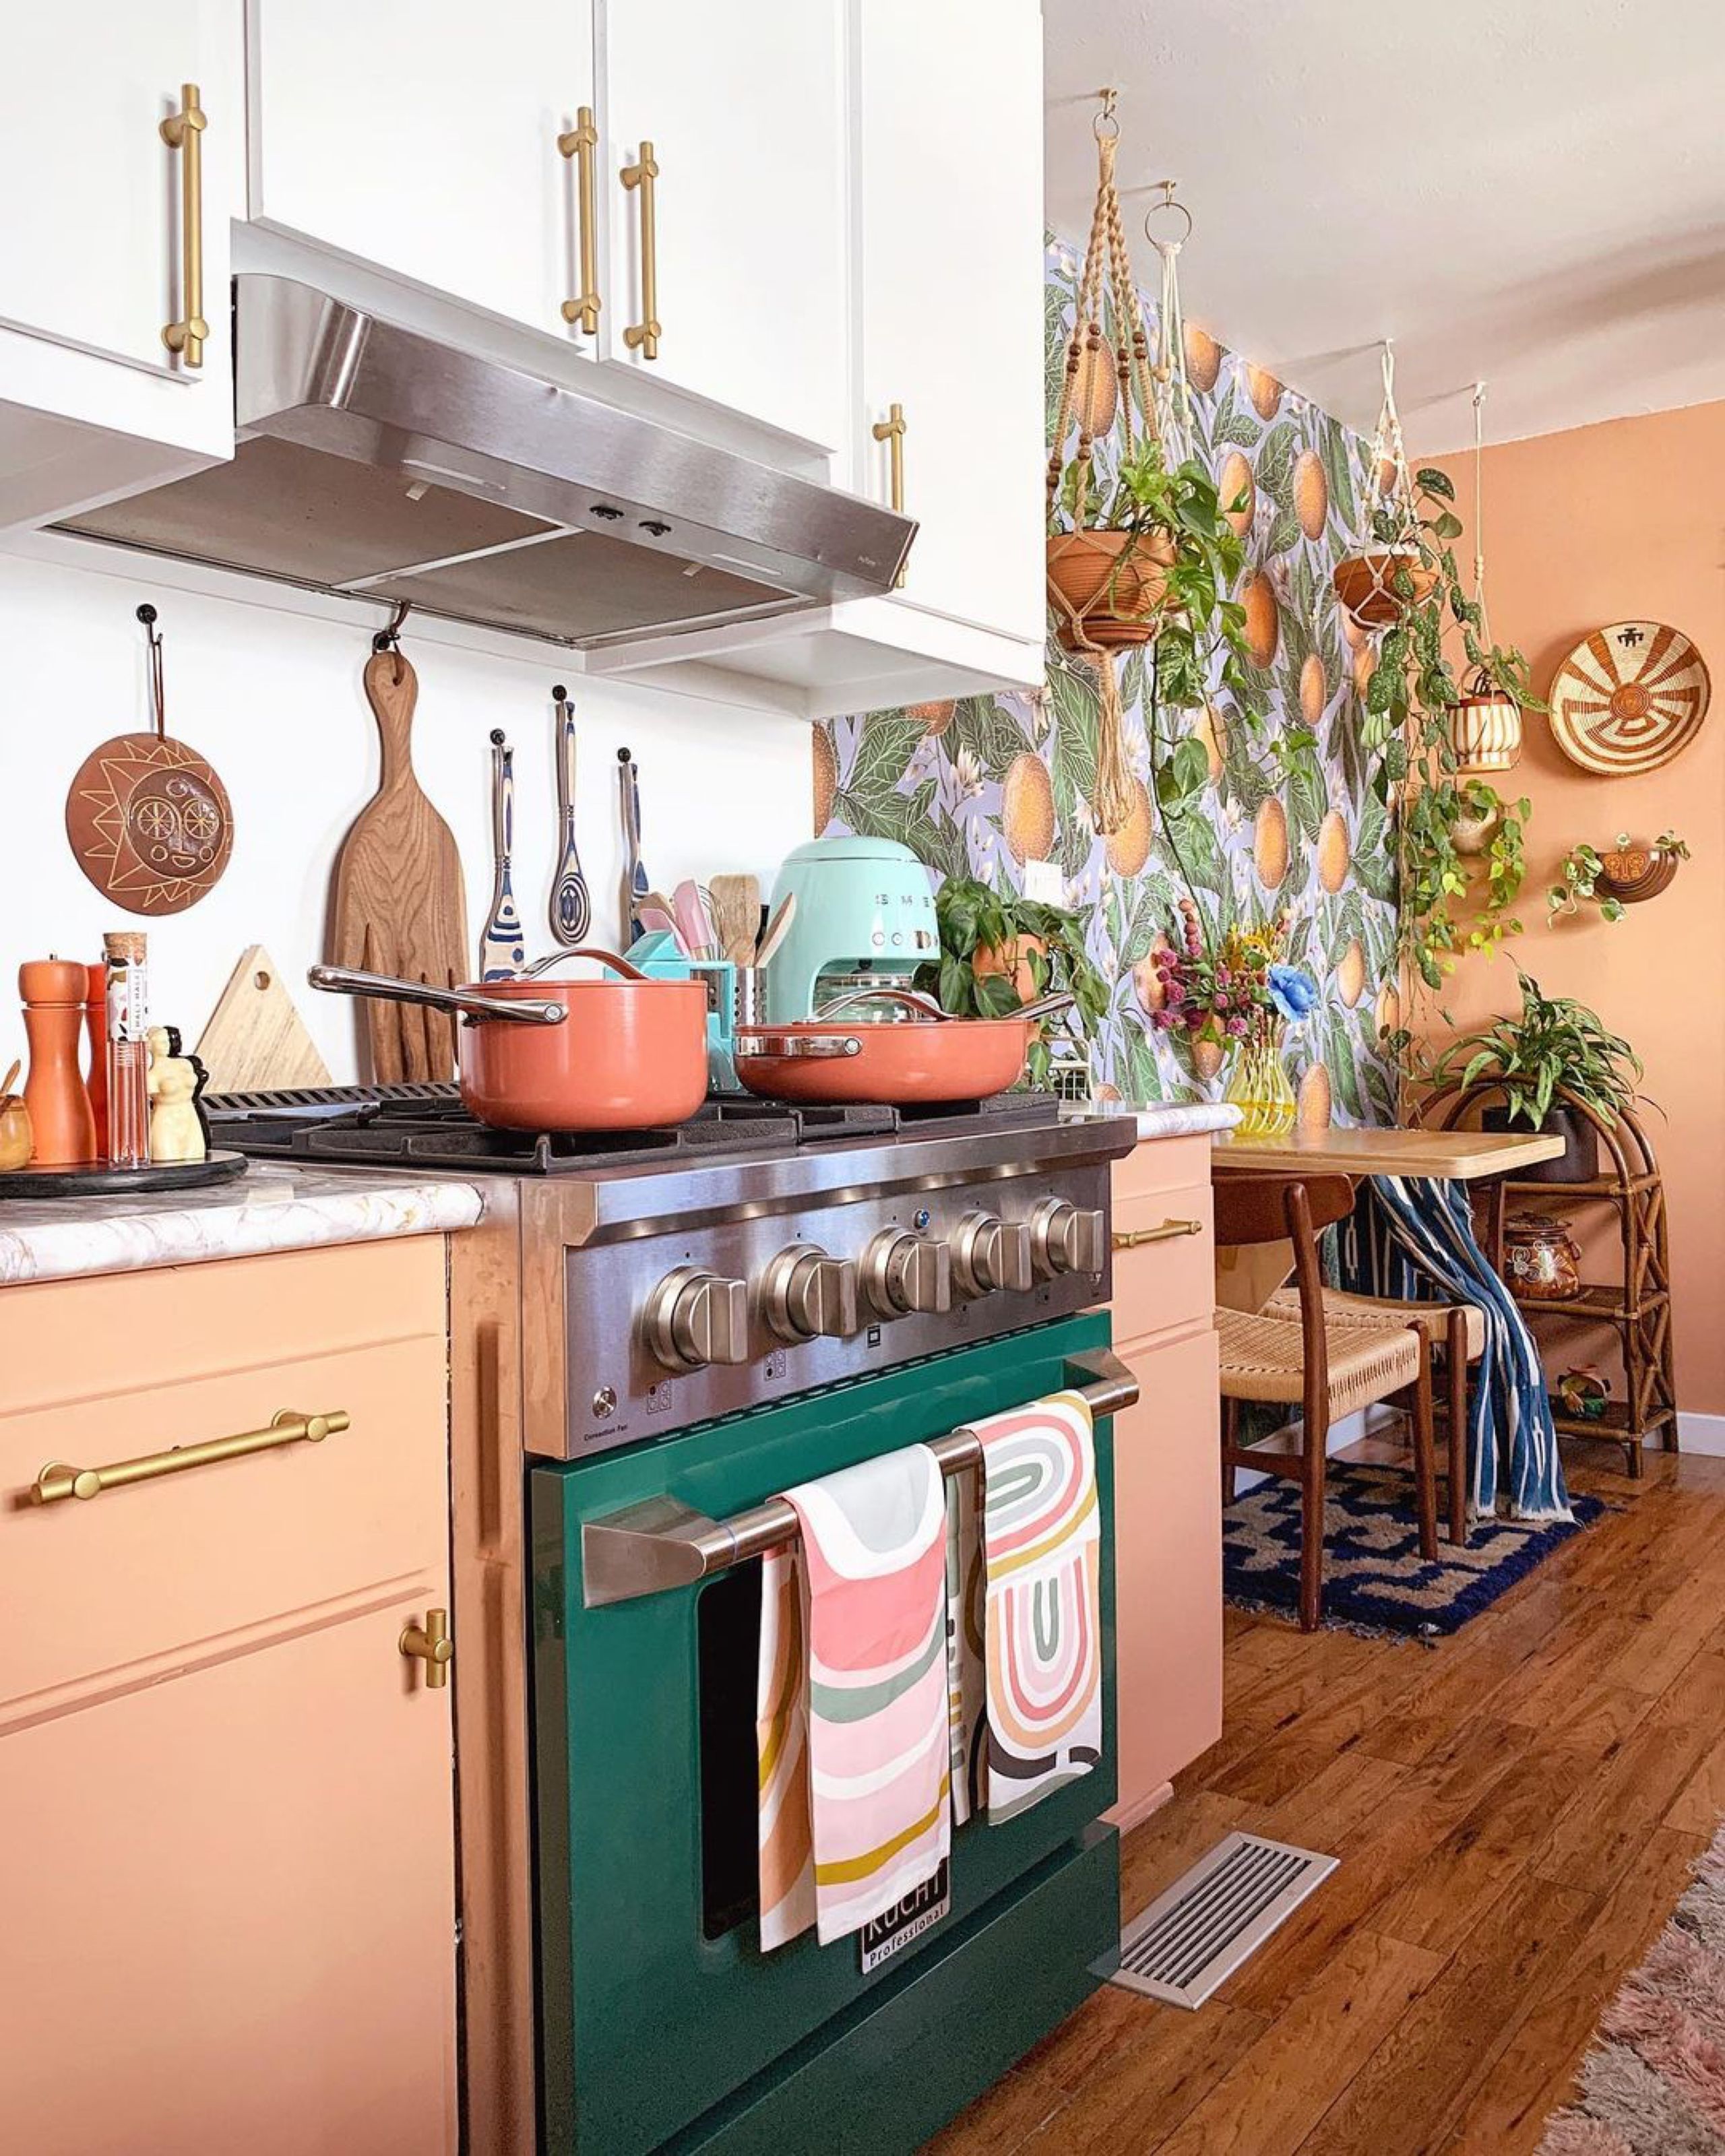 Top 96+ Images trendy kitchen modern kitchen wallpaper designs Full HD, 2k, 4k